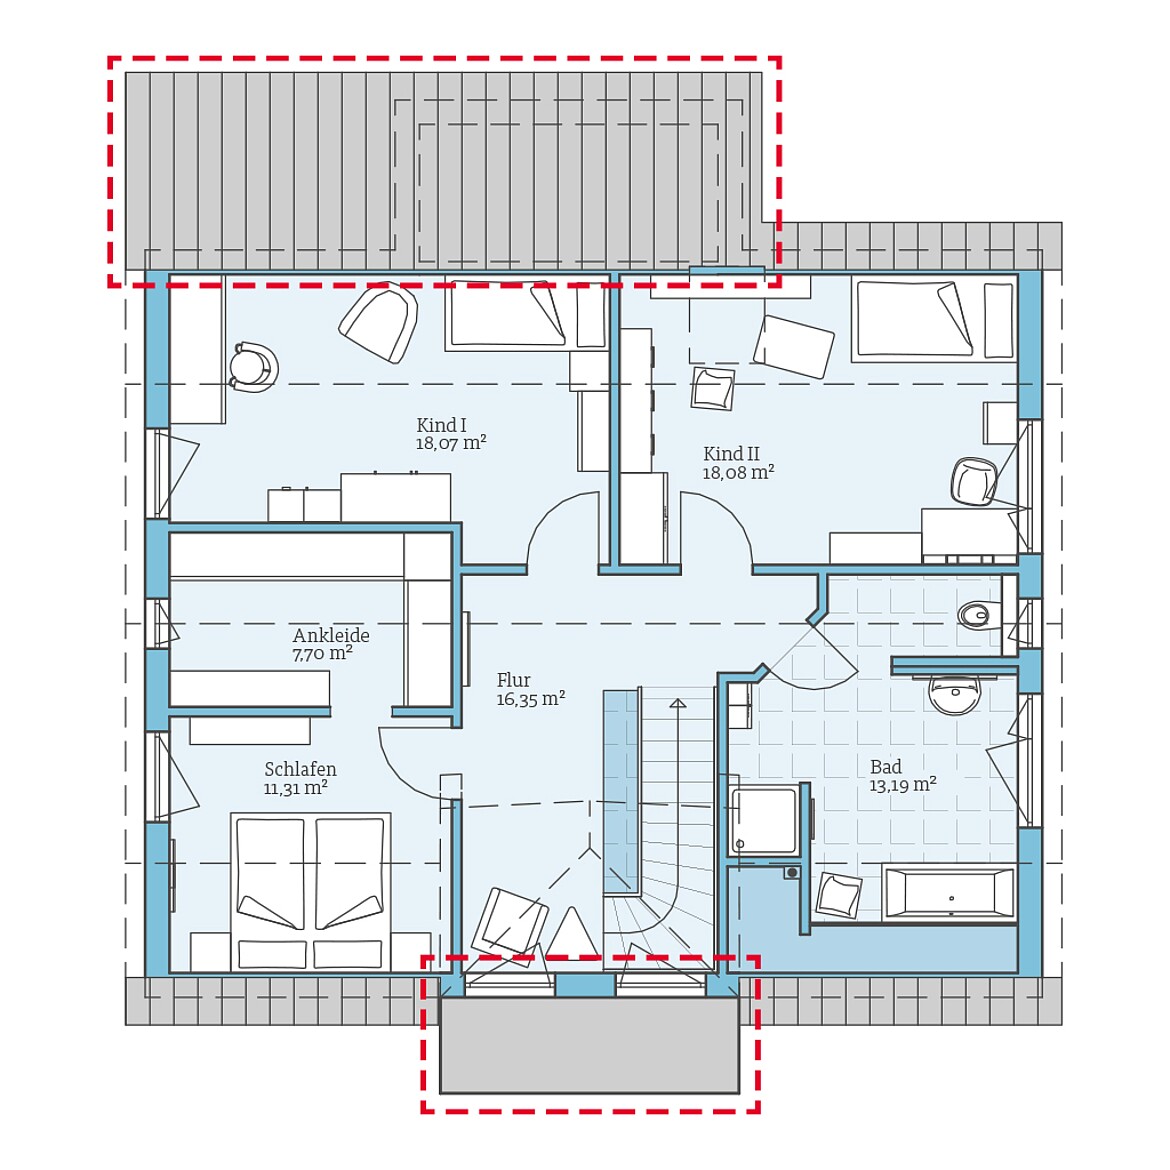 Prefabricated house Variant 35-174: Top floor plan option